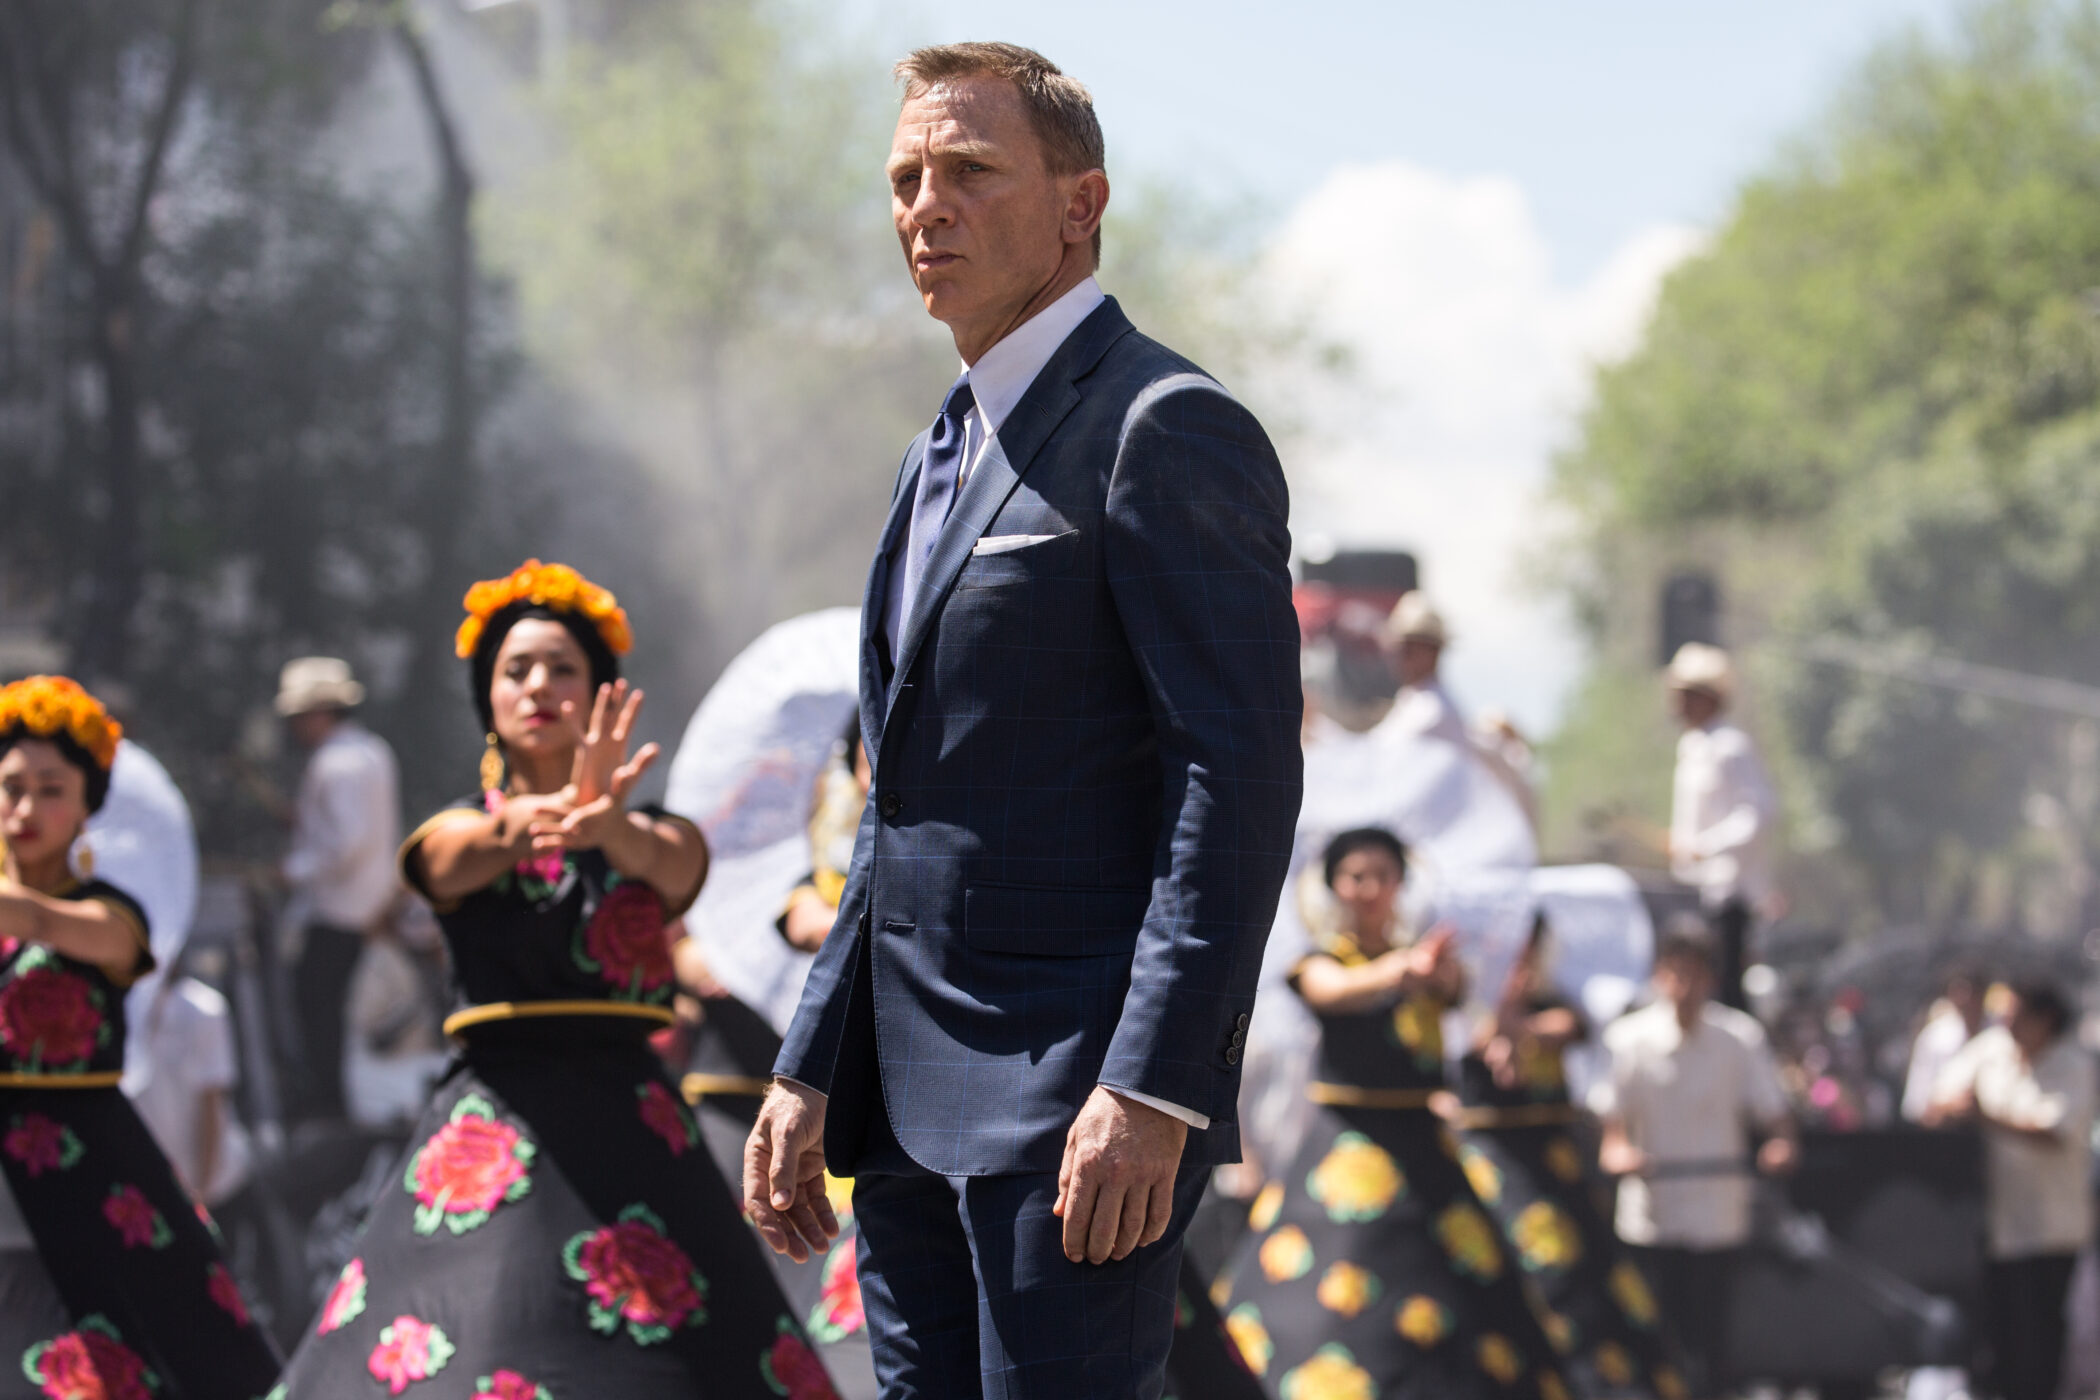 Bond (Daniel Craig) following Marco Sciarra through the Day of the Dead parade; Tolsa Square, Mexico City.